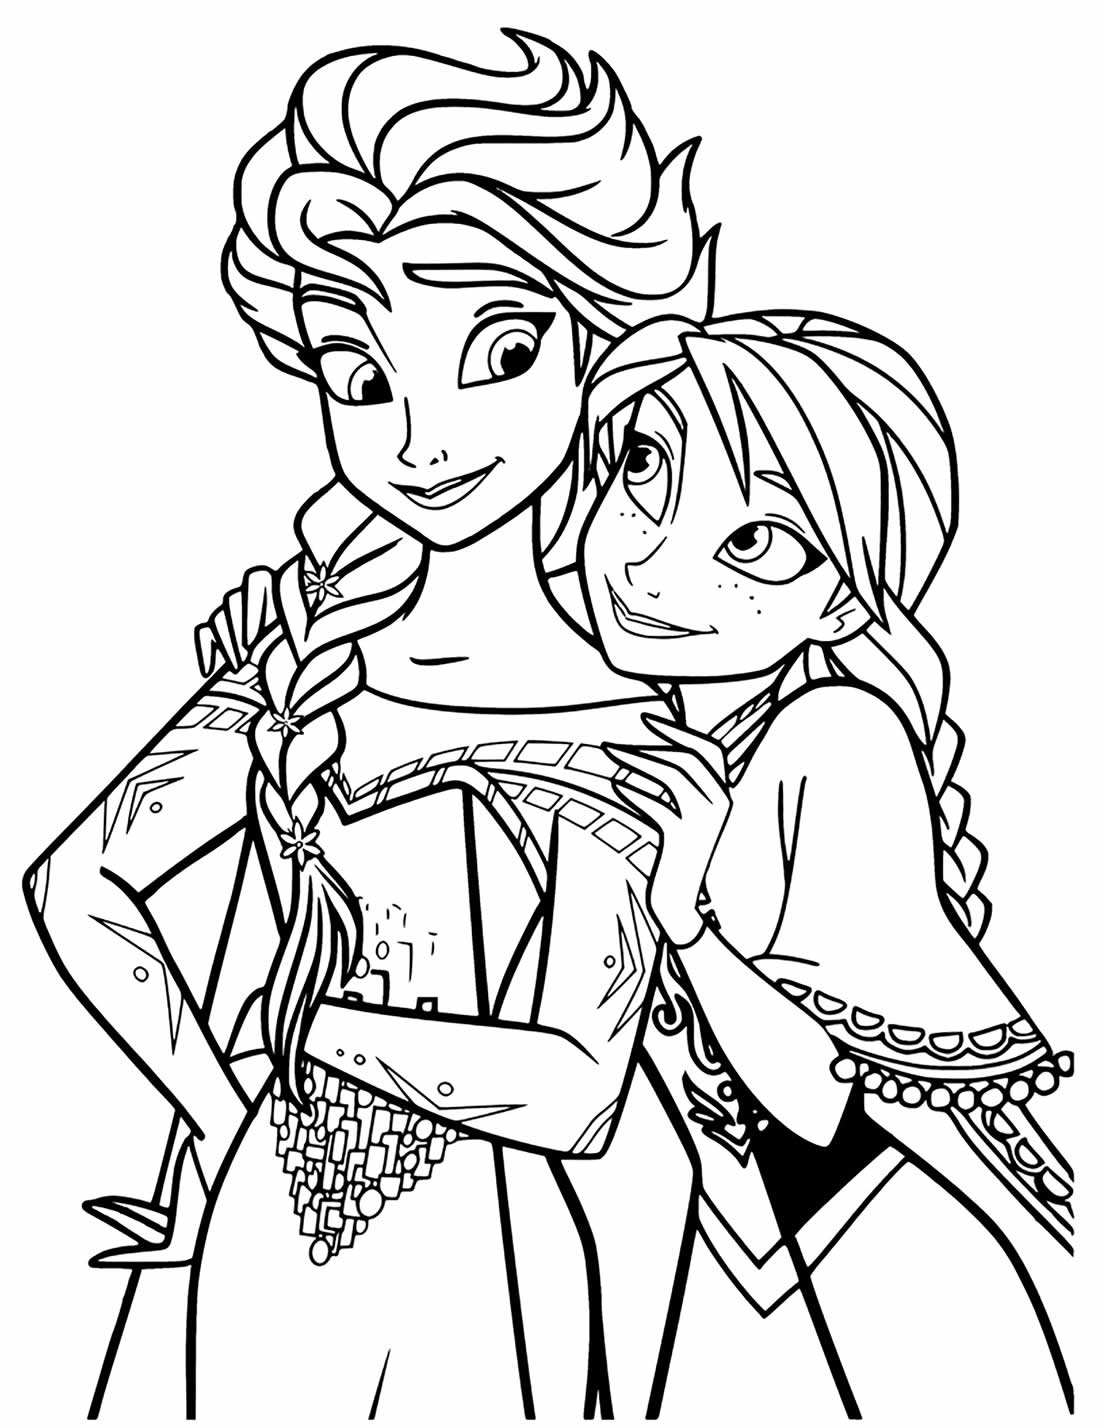 Lindo desenho de Elsa e Anna - Frozen